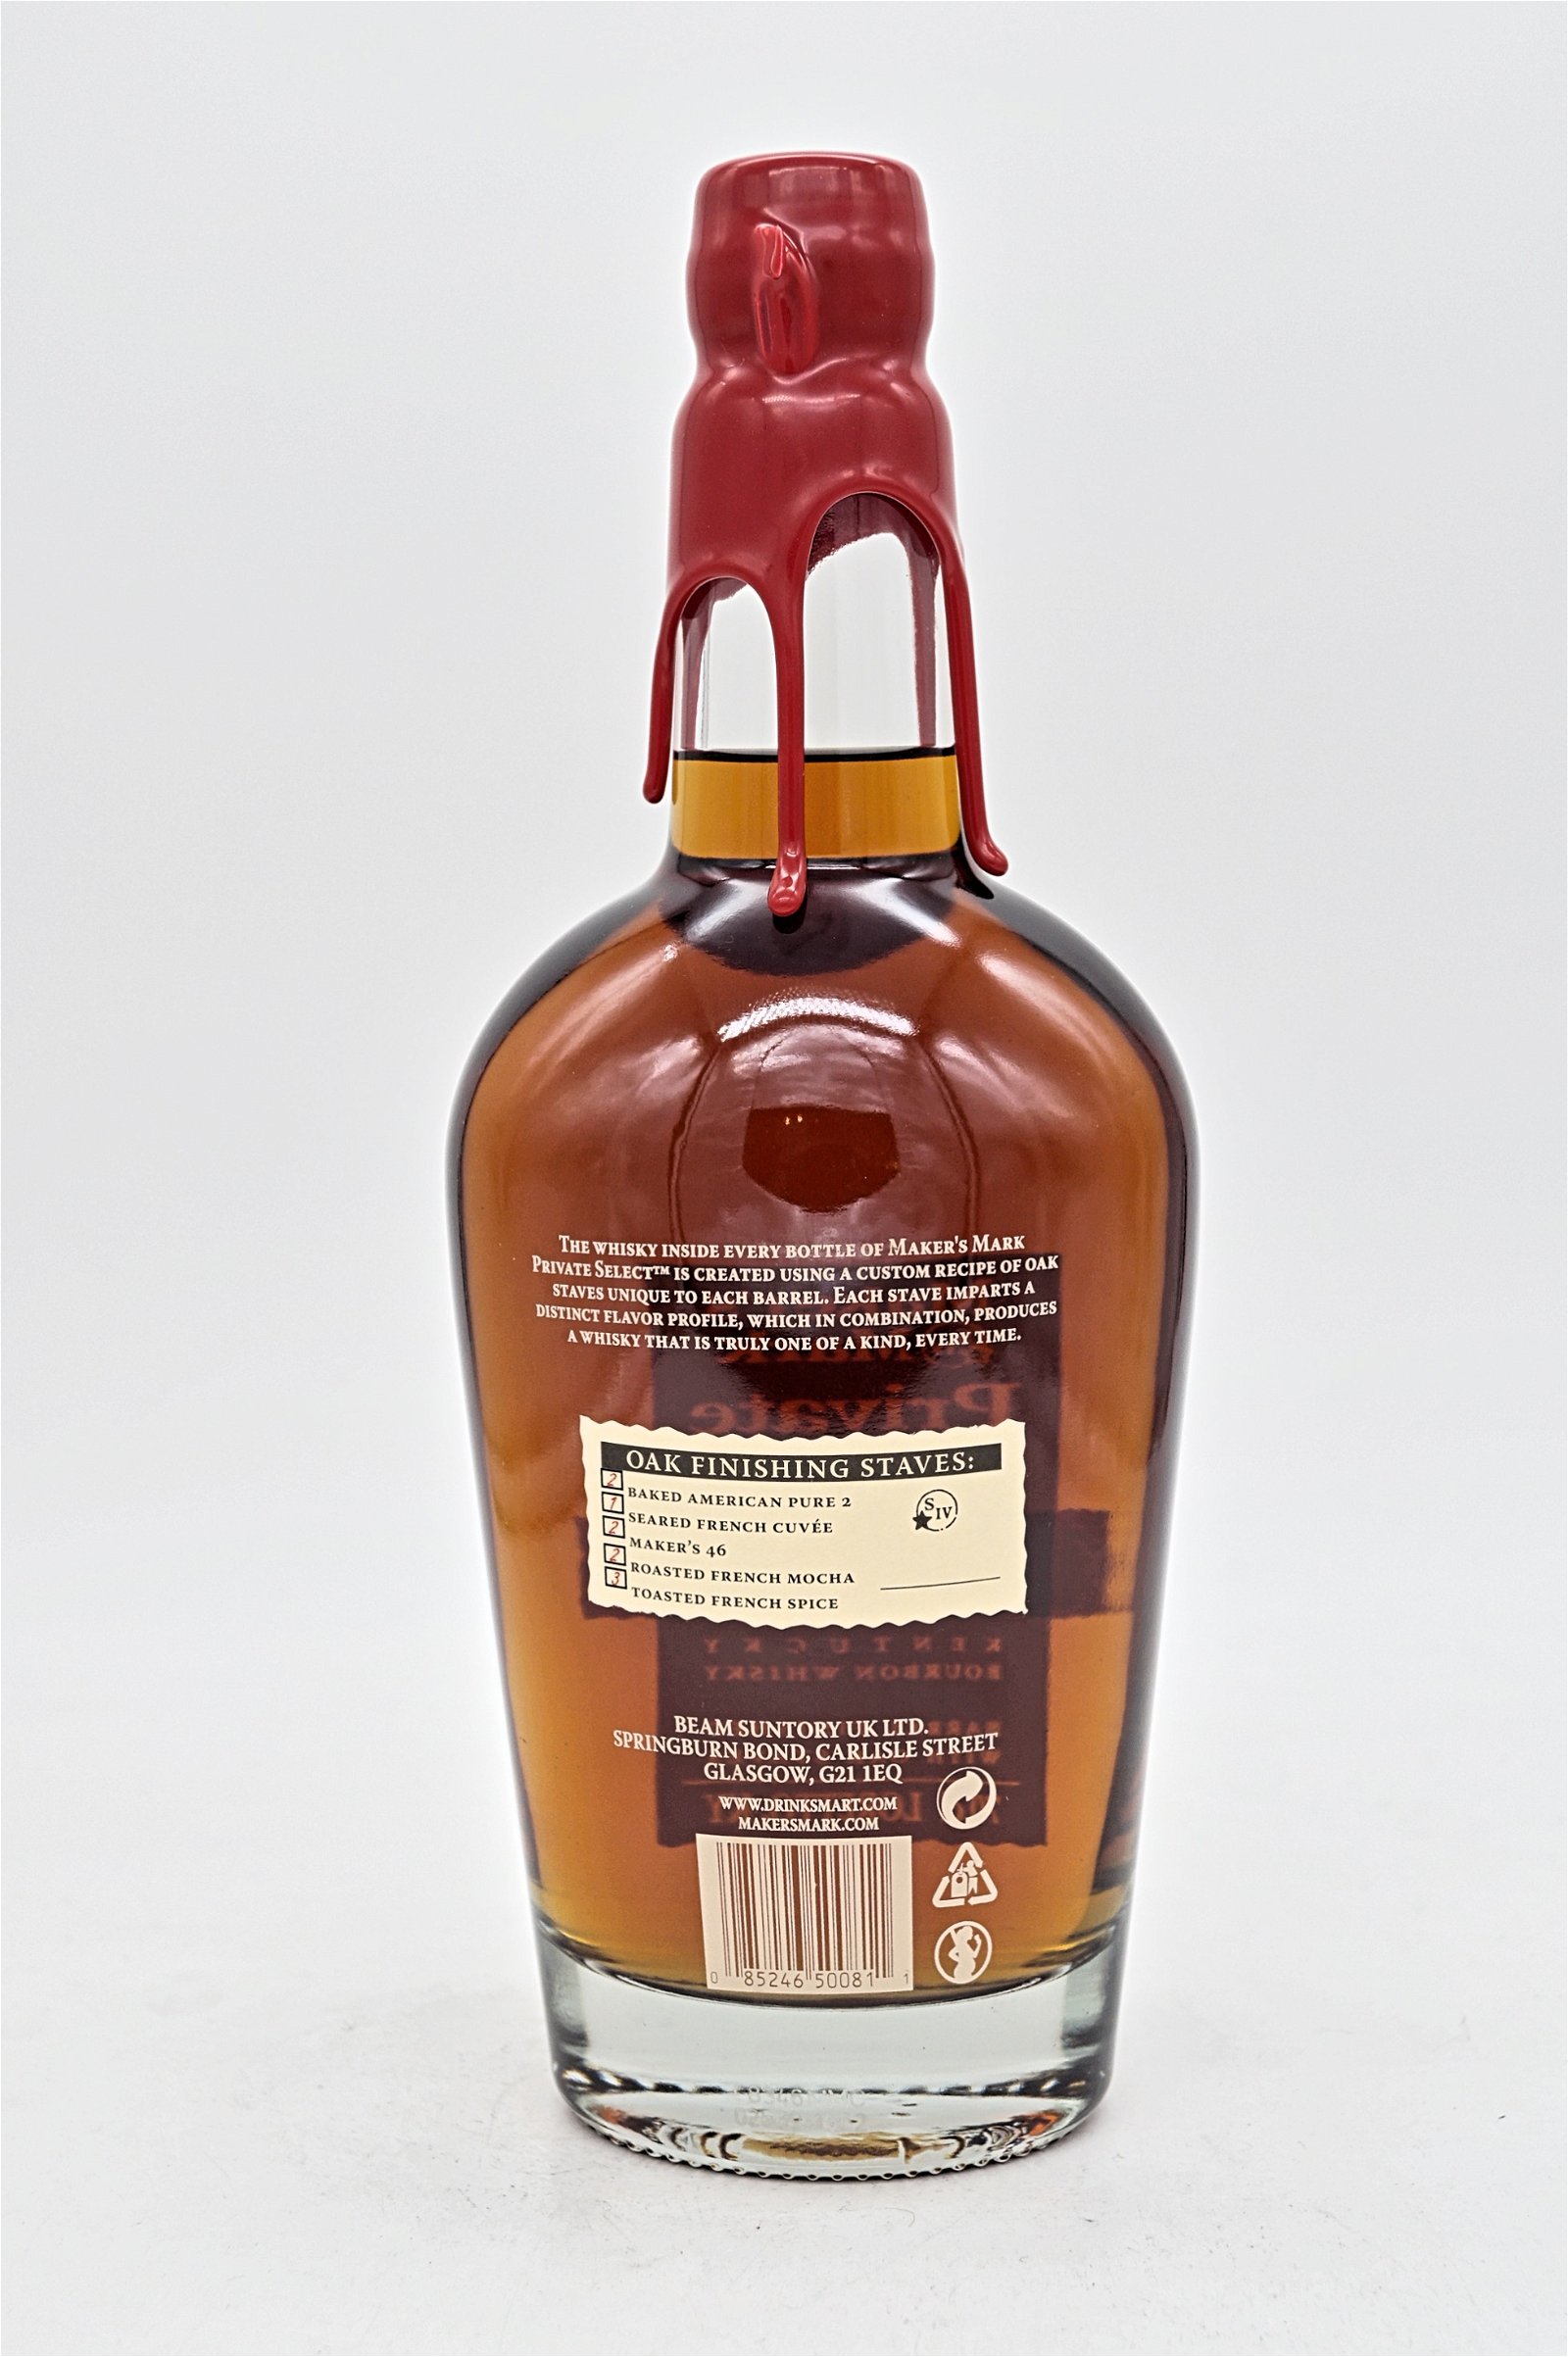 Makers Mark Private Select Sansibar Selection 110 Proof Kentucky Bourbon Whisky